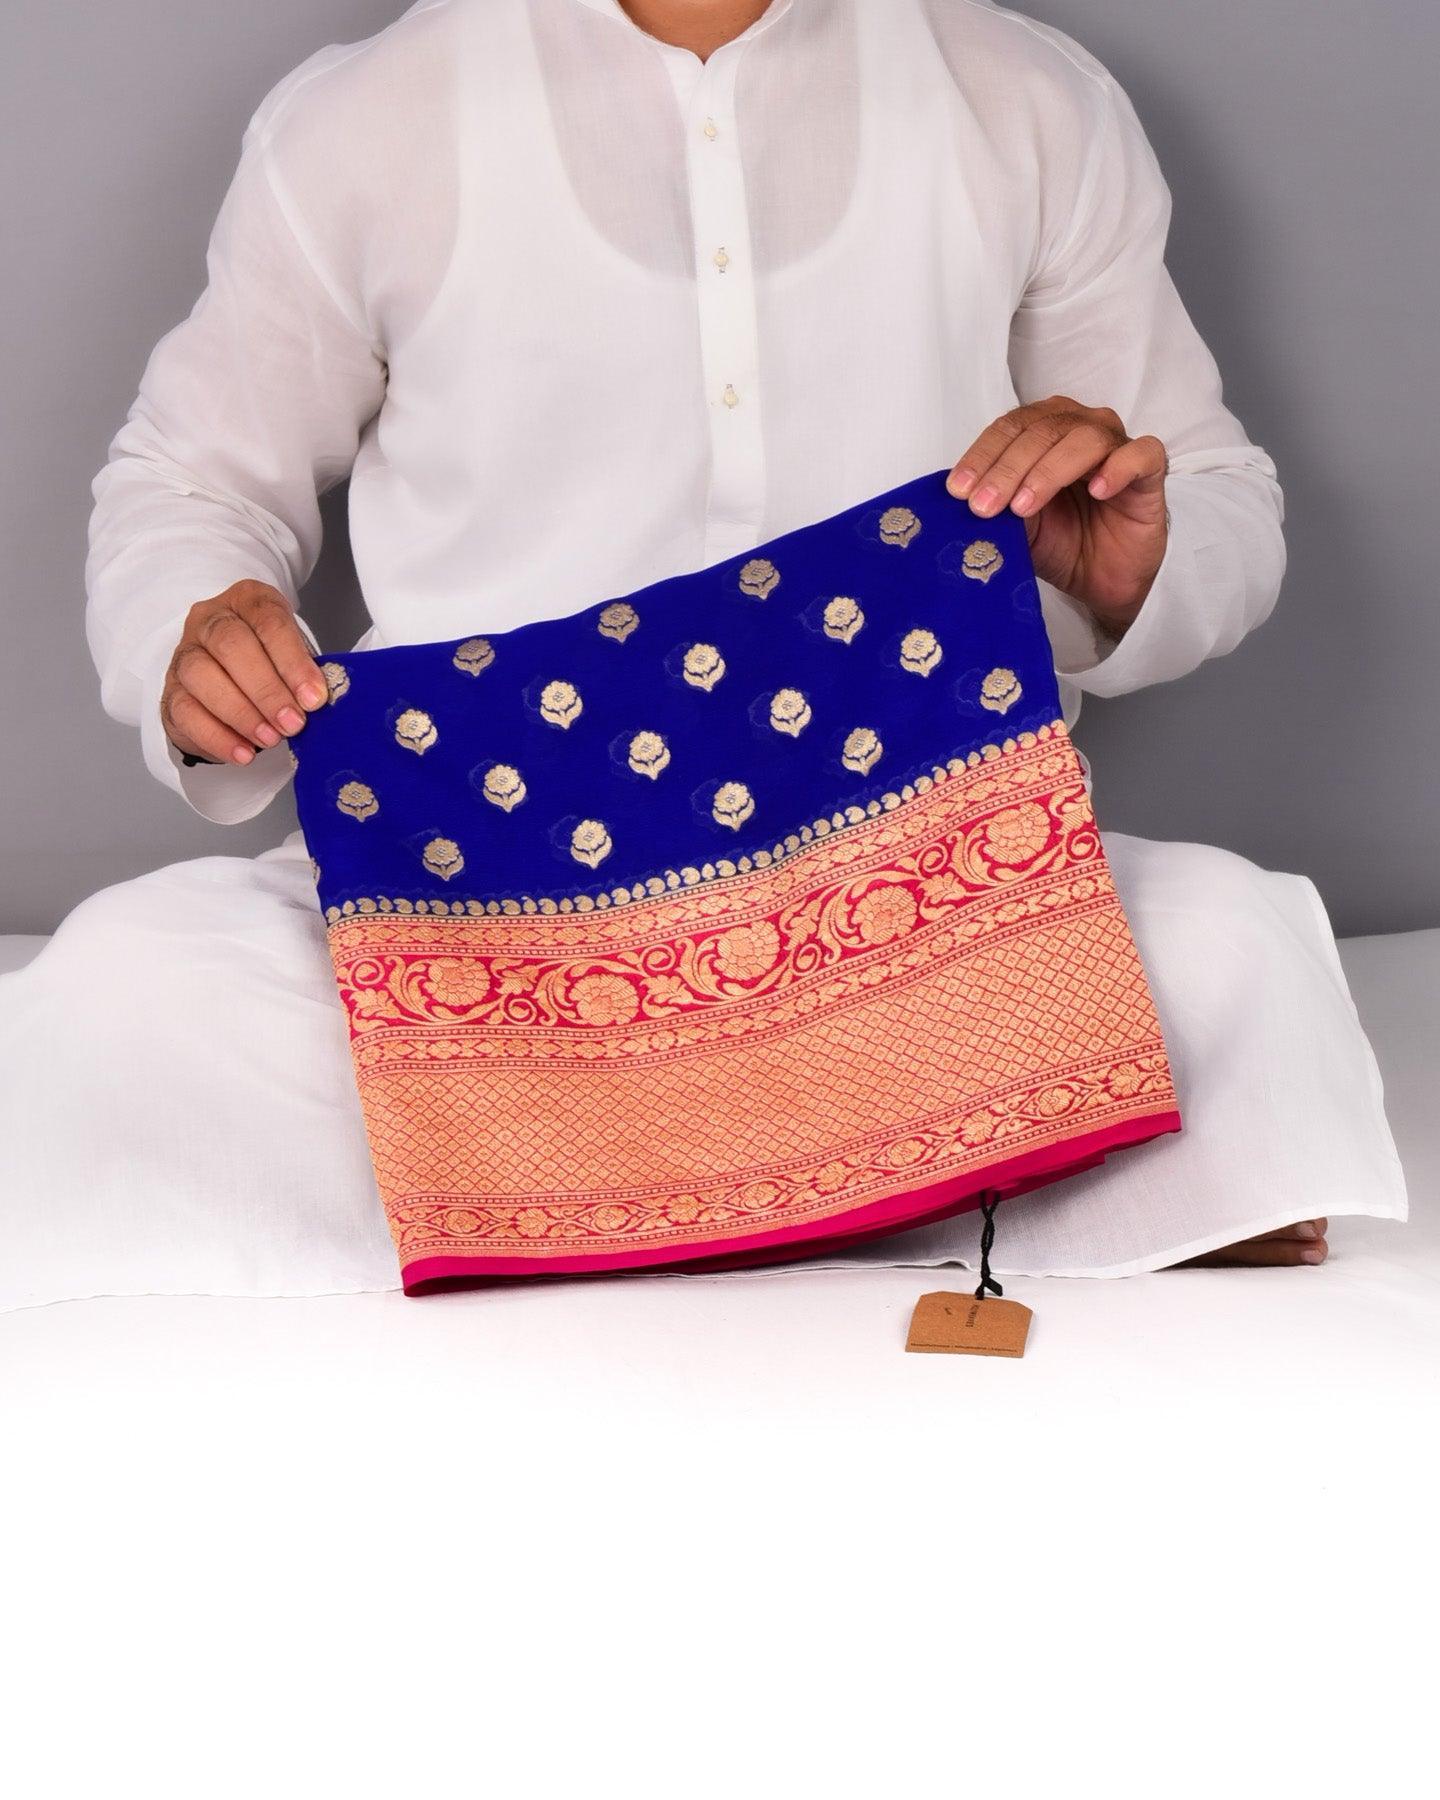 Royal Blue Banarasi Cutwork Brocade Handwoven Khaddi Georgette Saree with Contrast Pink Border Pallu - By HolyWeaves, Benares